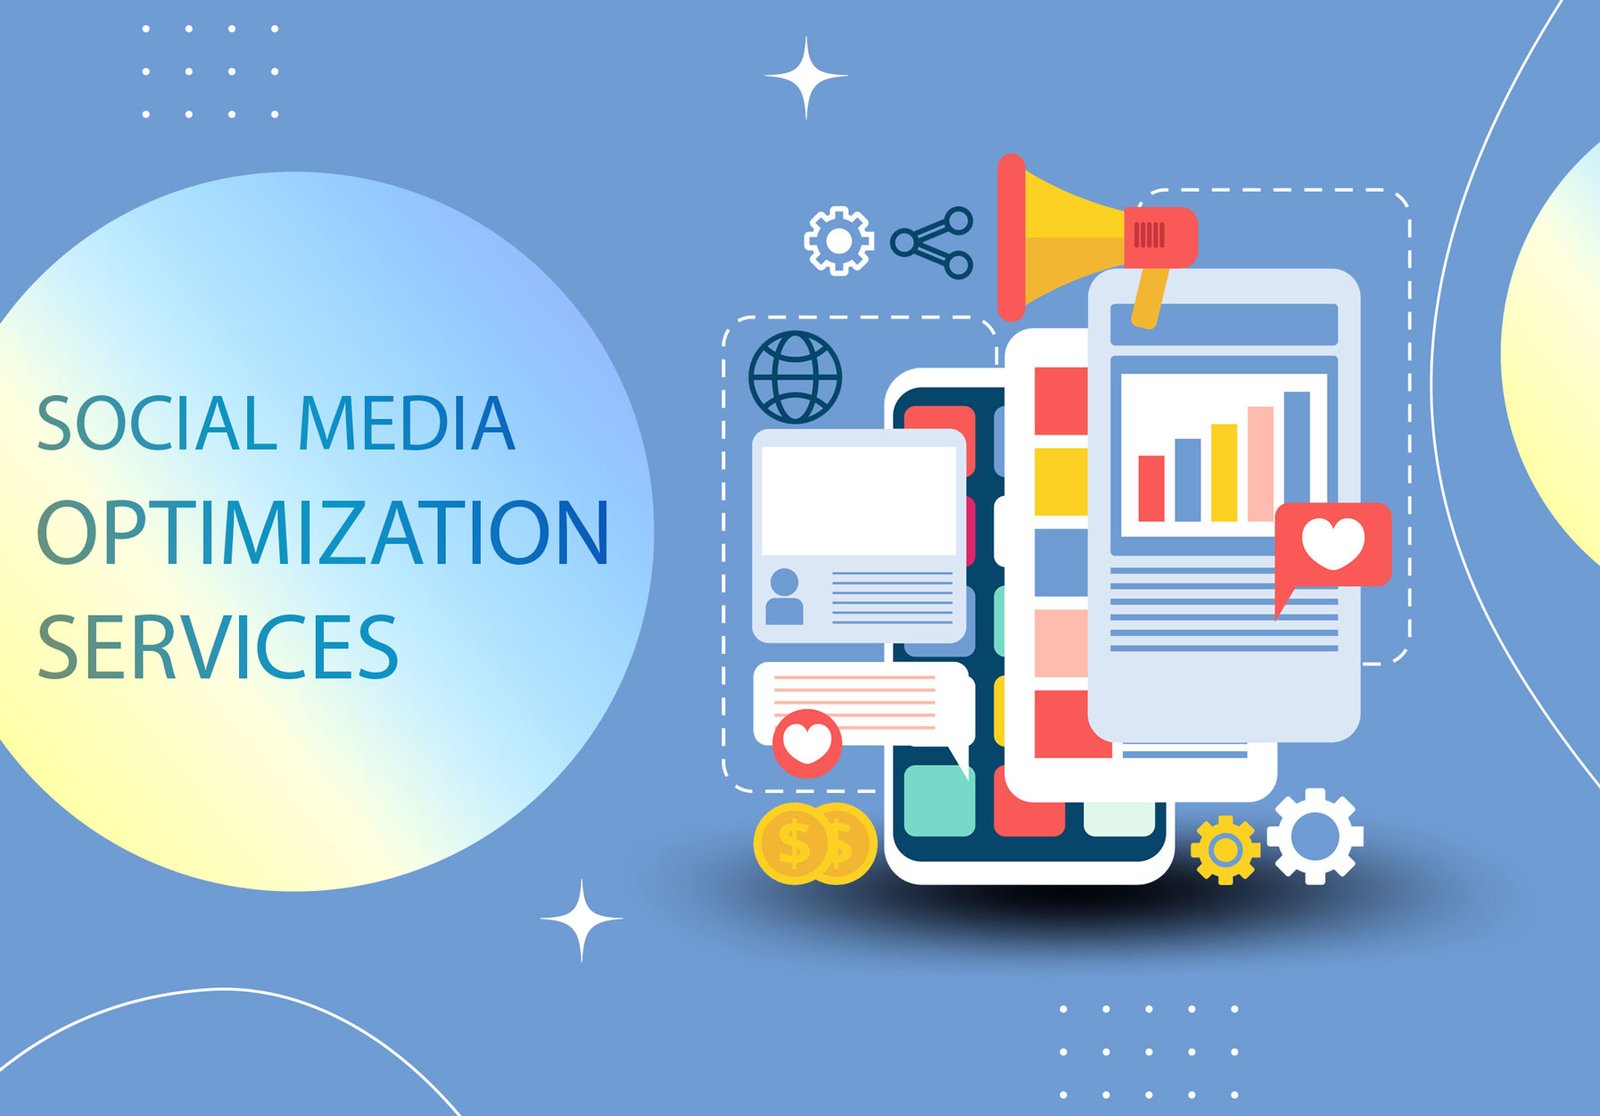 Social media optimization services